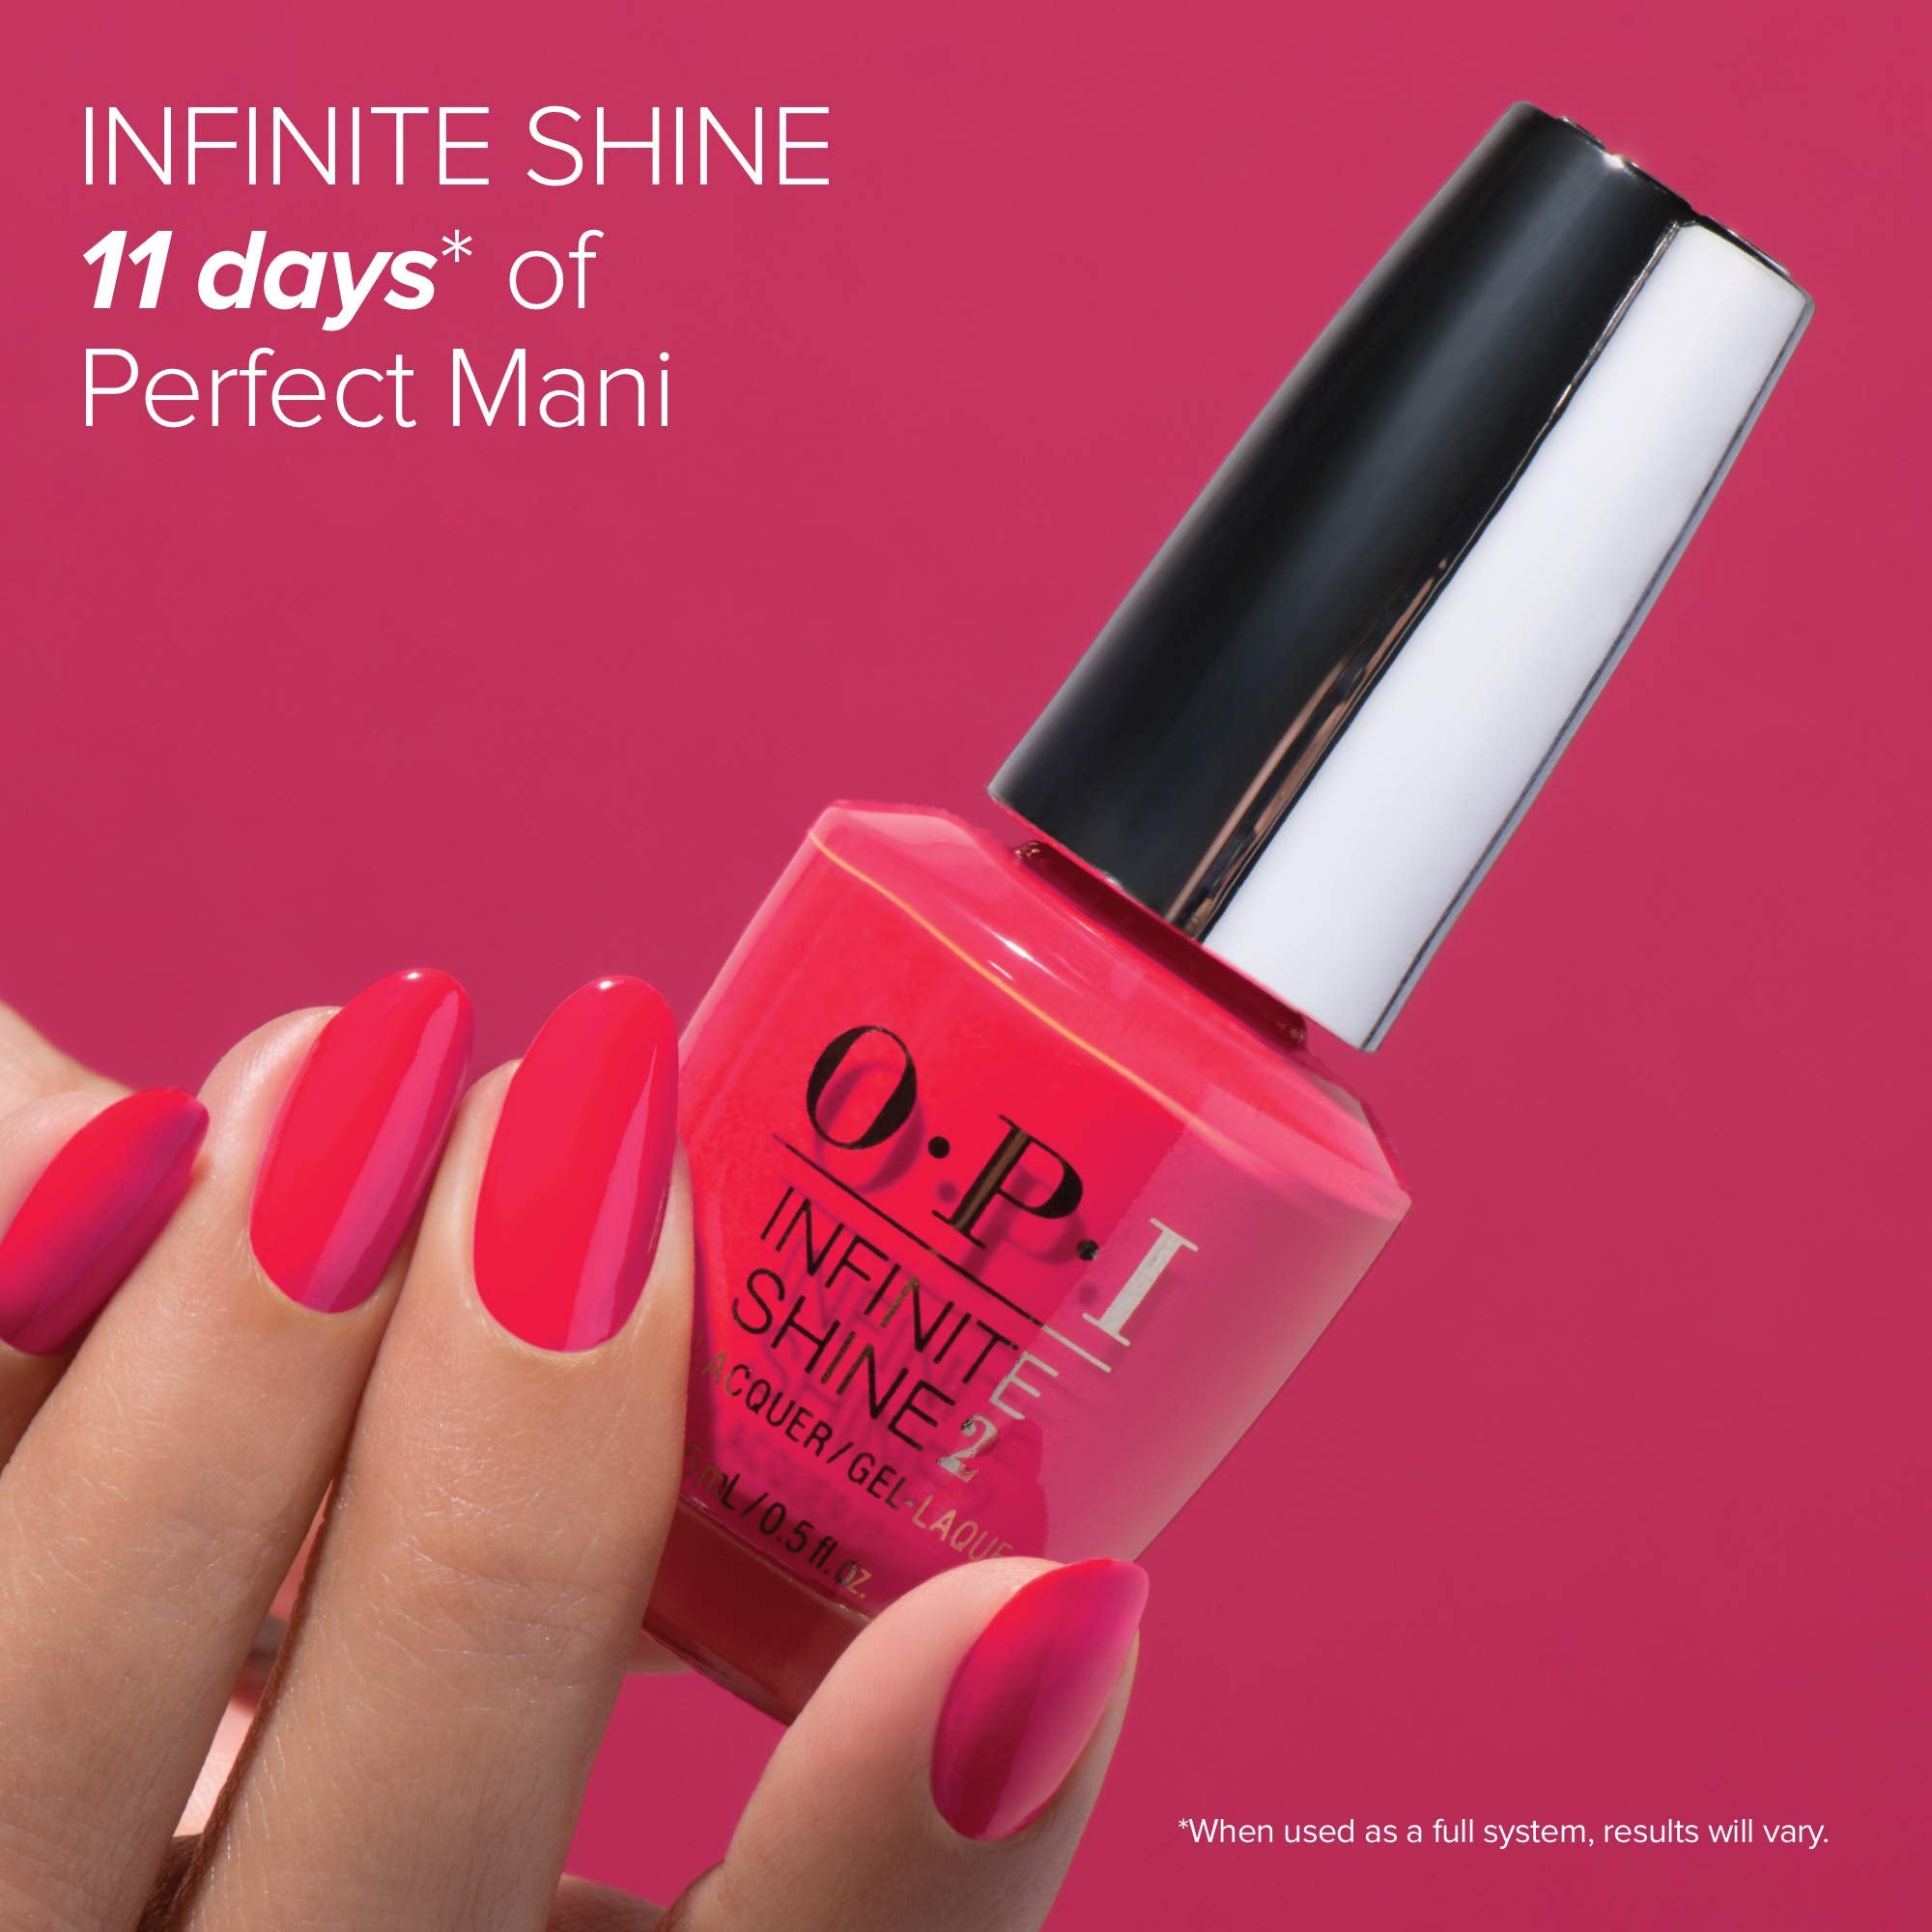 OPI Infinite Shine 2 Long-Wear Lacquer, Half Past Nude, Nude Long-Lasting Nail Polish, 0.5 fl oz